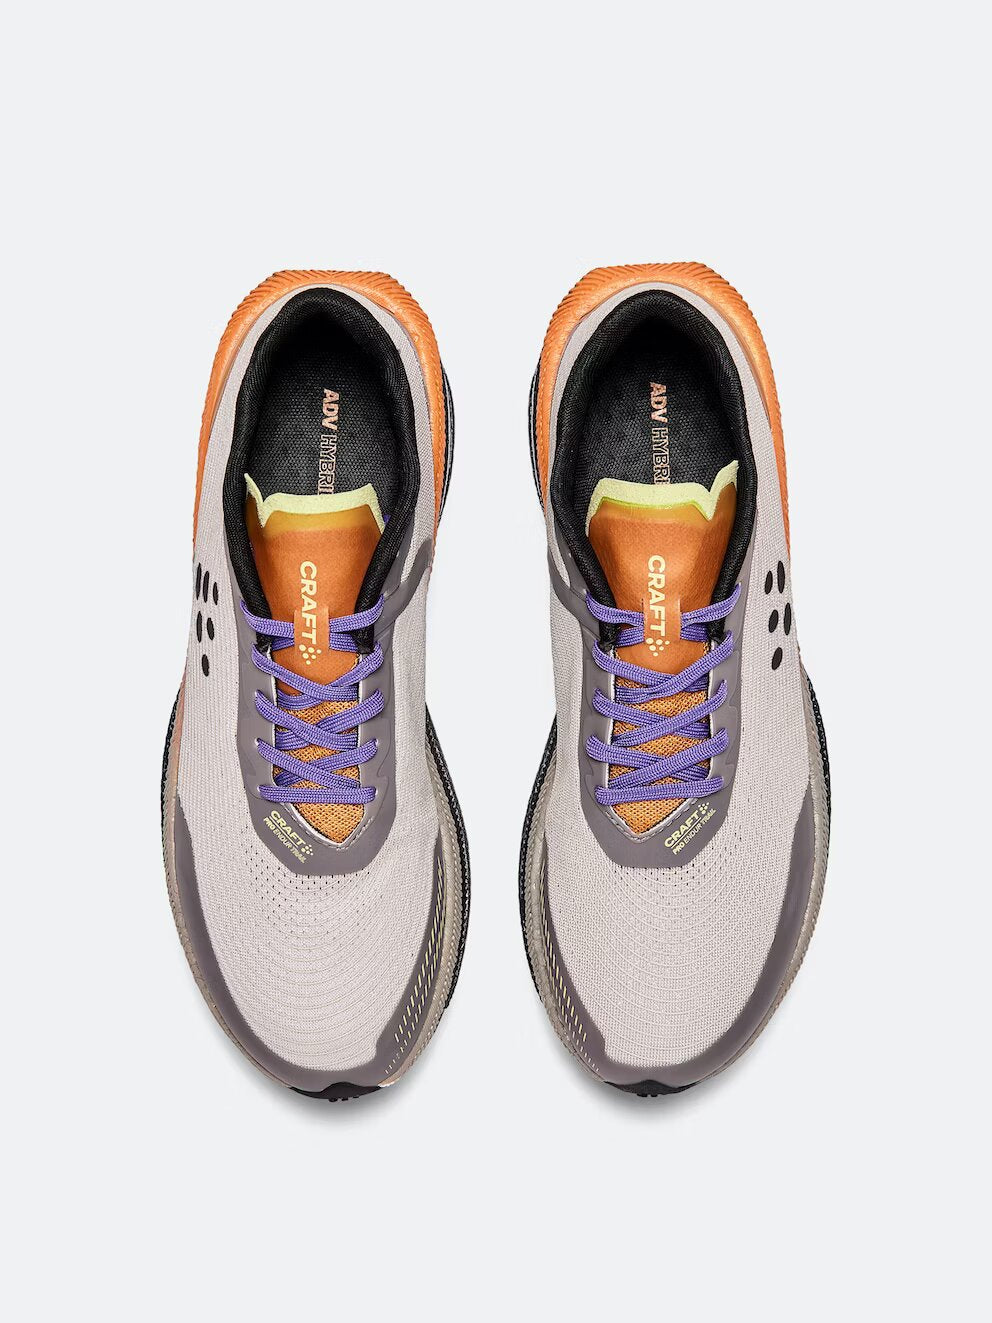 Scarpe da ginnastica Endurance trail grigio arancione